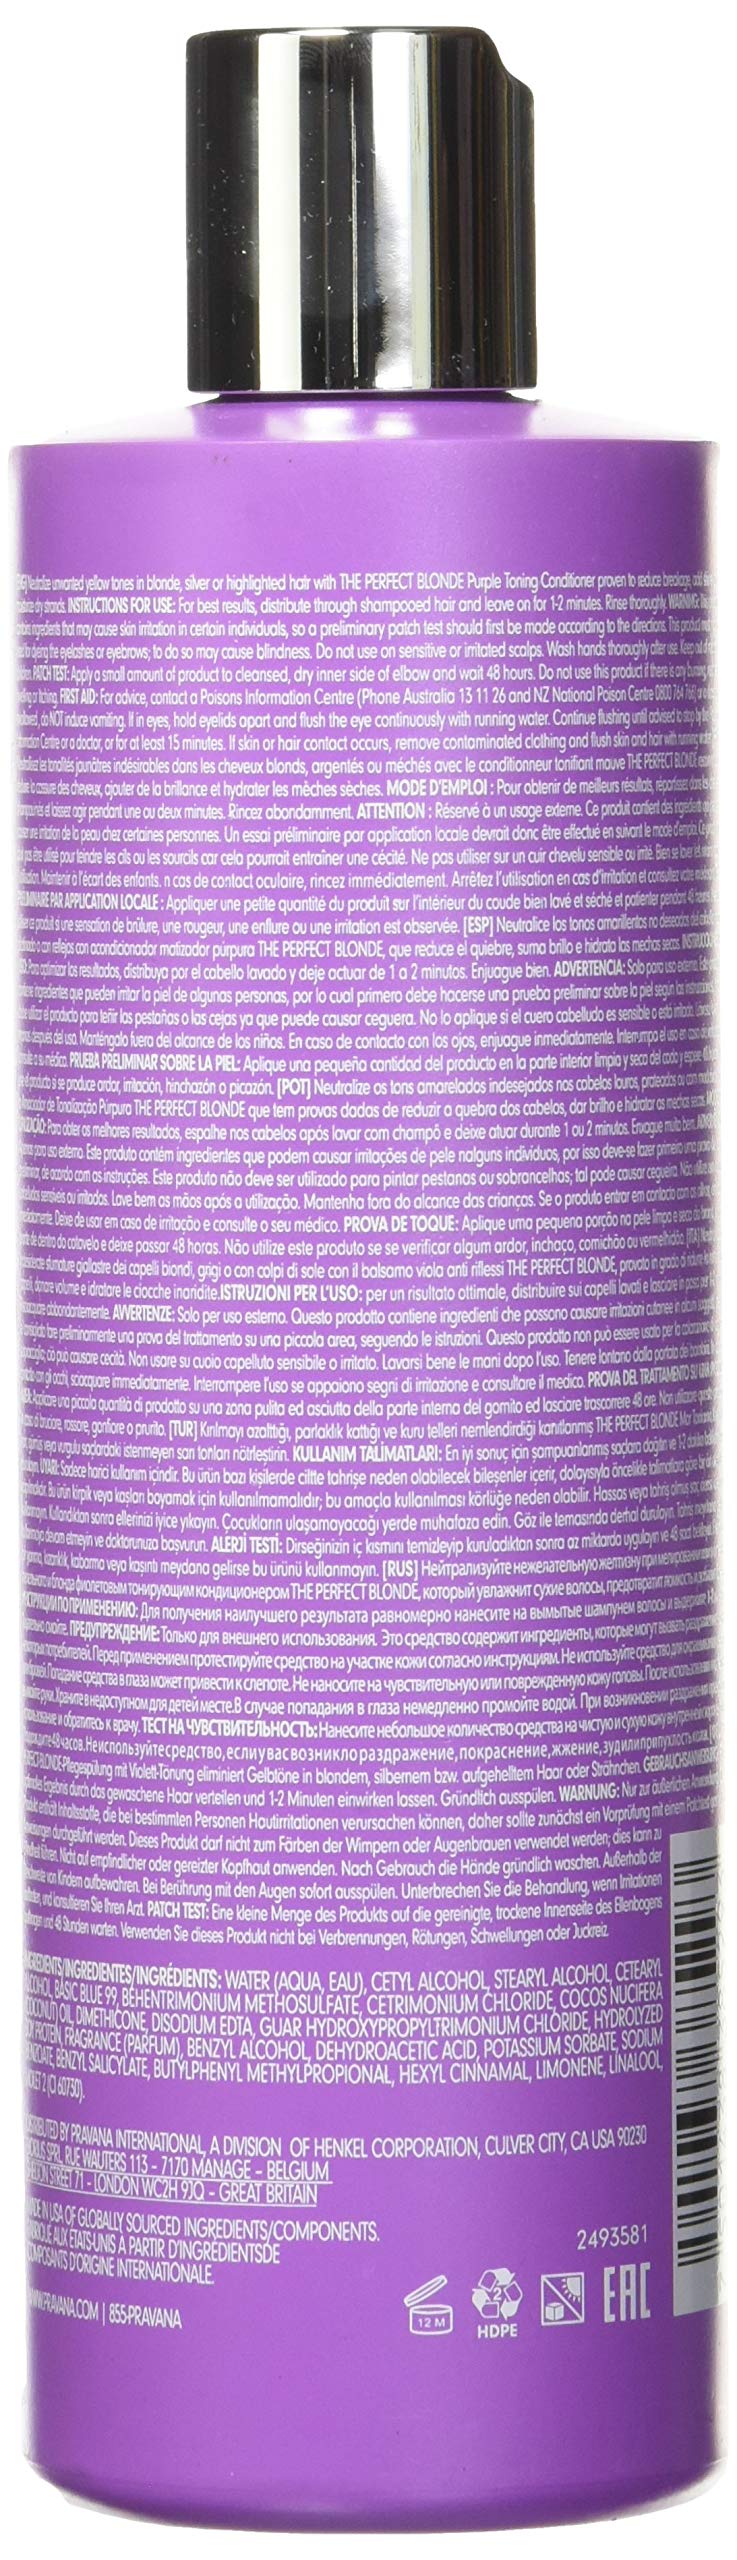 [Australia] - PRAVANA THE PERFECT BLONDE Purple Toning Conditioner 10.1 oz by Pravana 